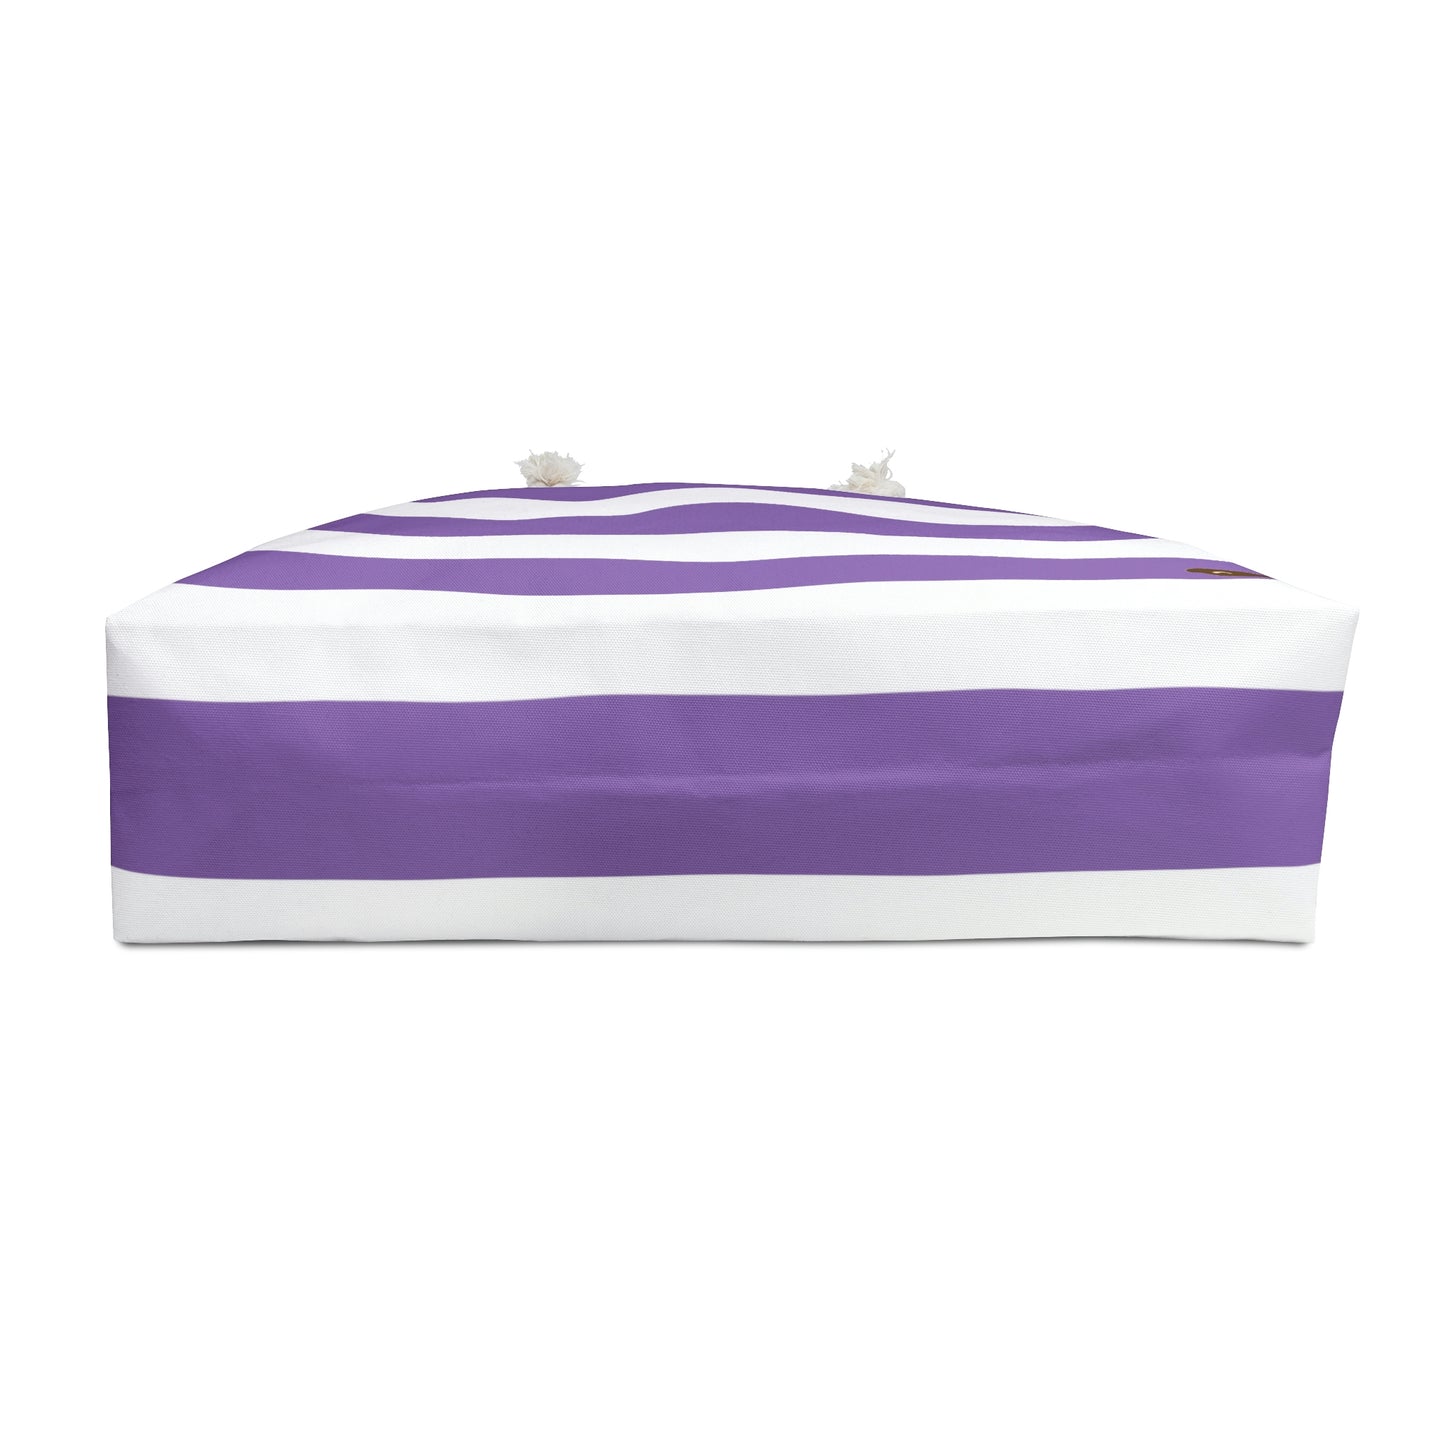 Weekender Tote Bag - Lilac/White Stripes